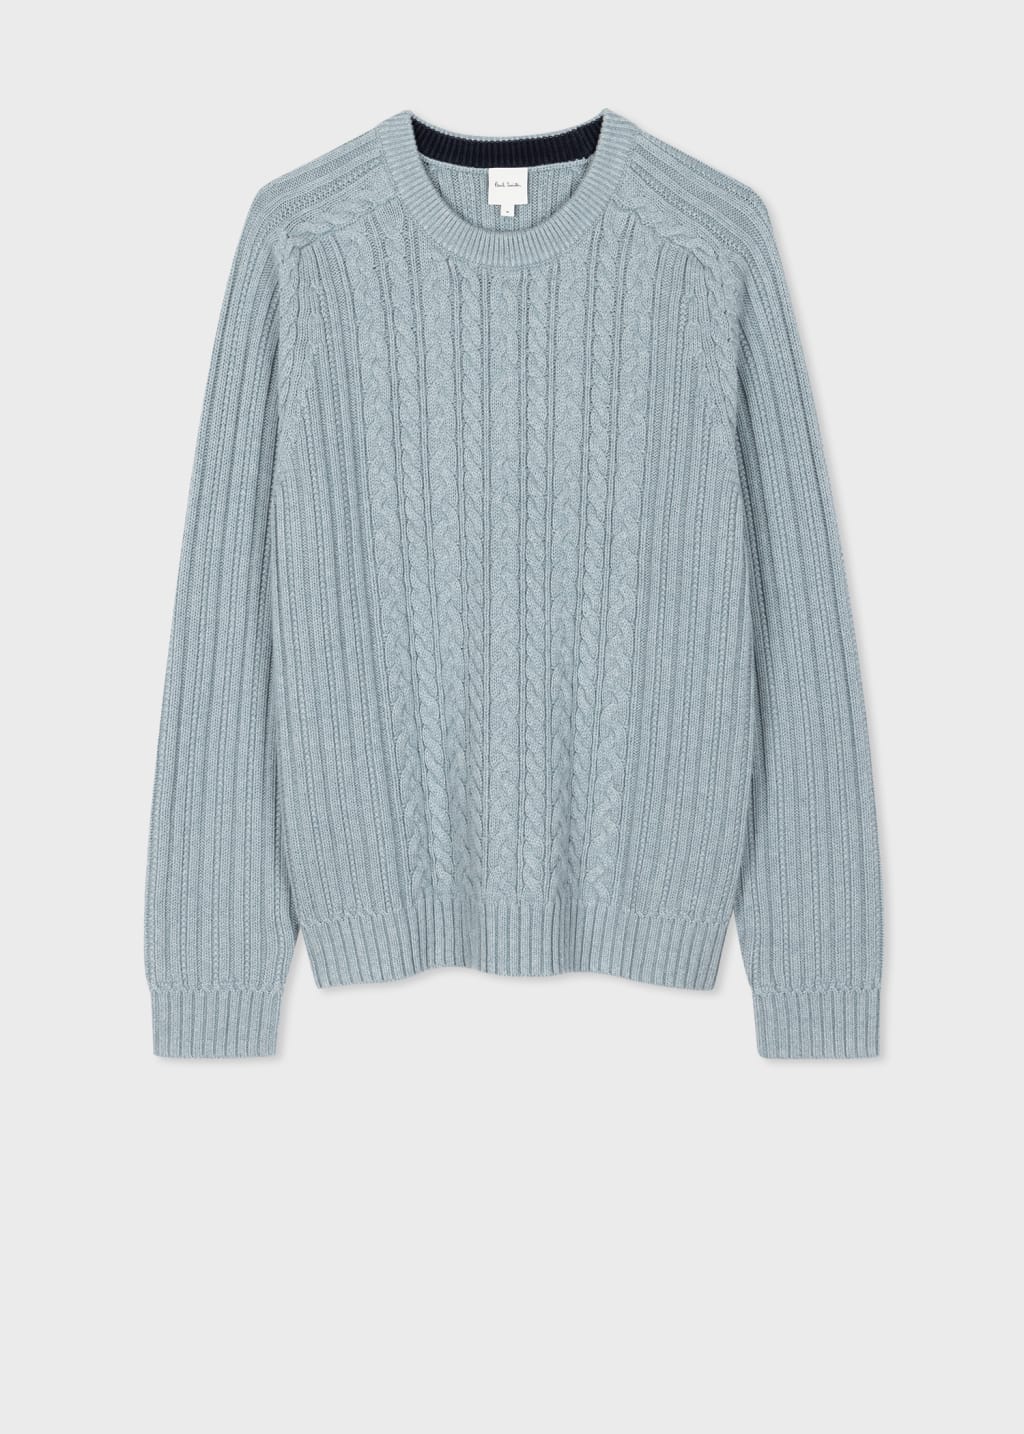 Front View - Pale Blue Cotton-Cashmere Cable Knit Sweater Paul Smith